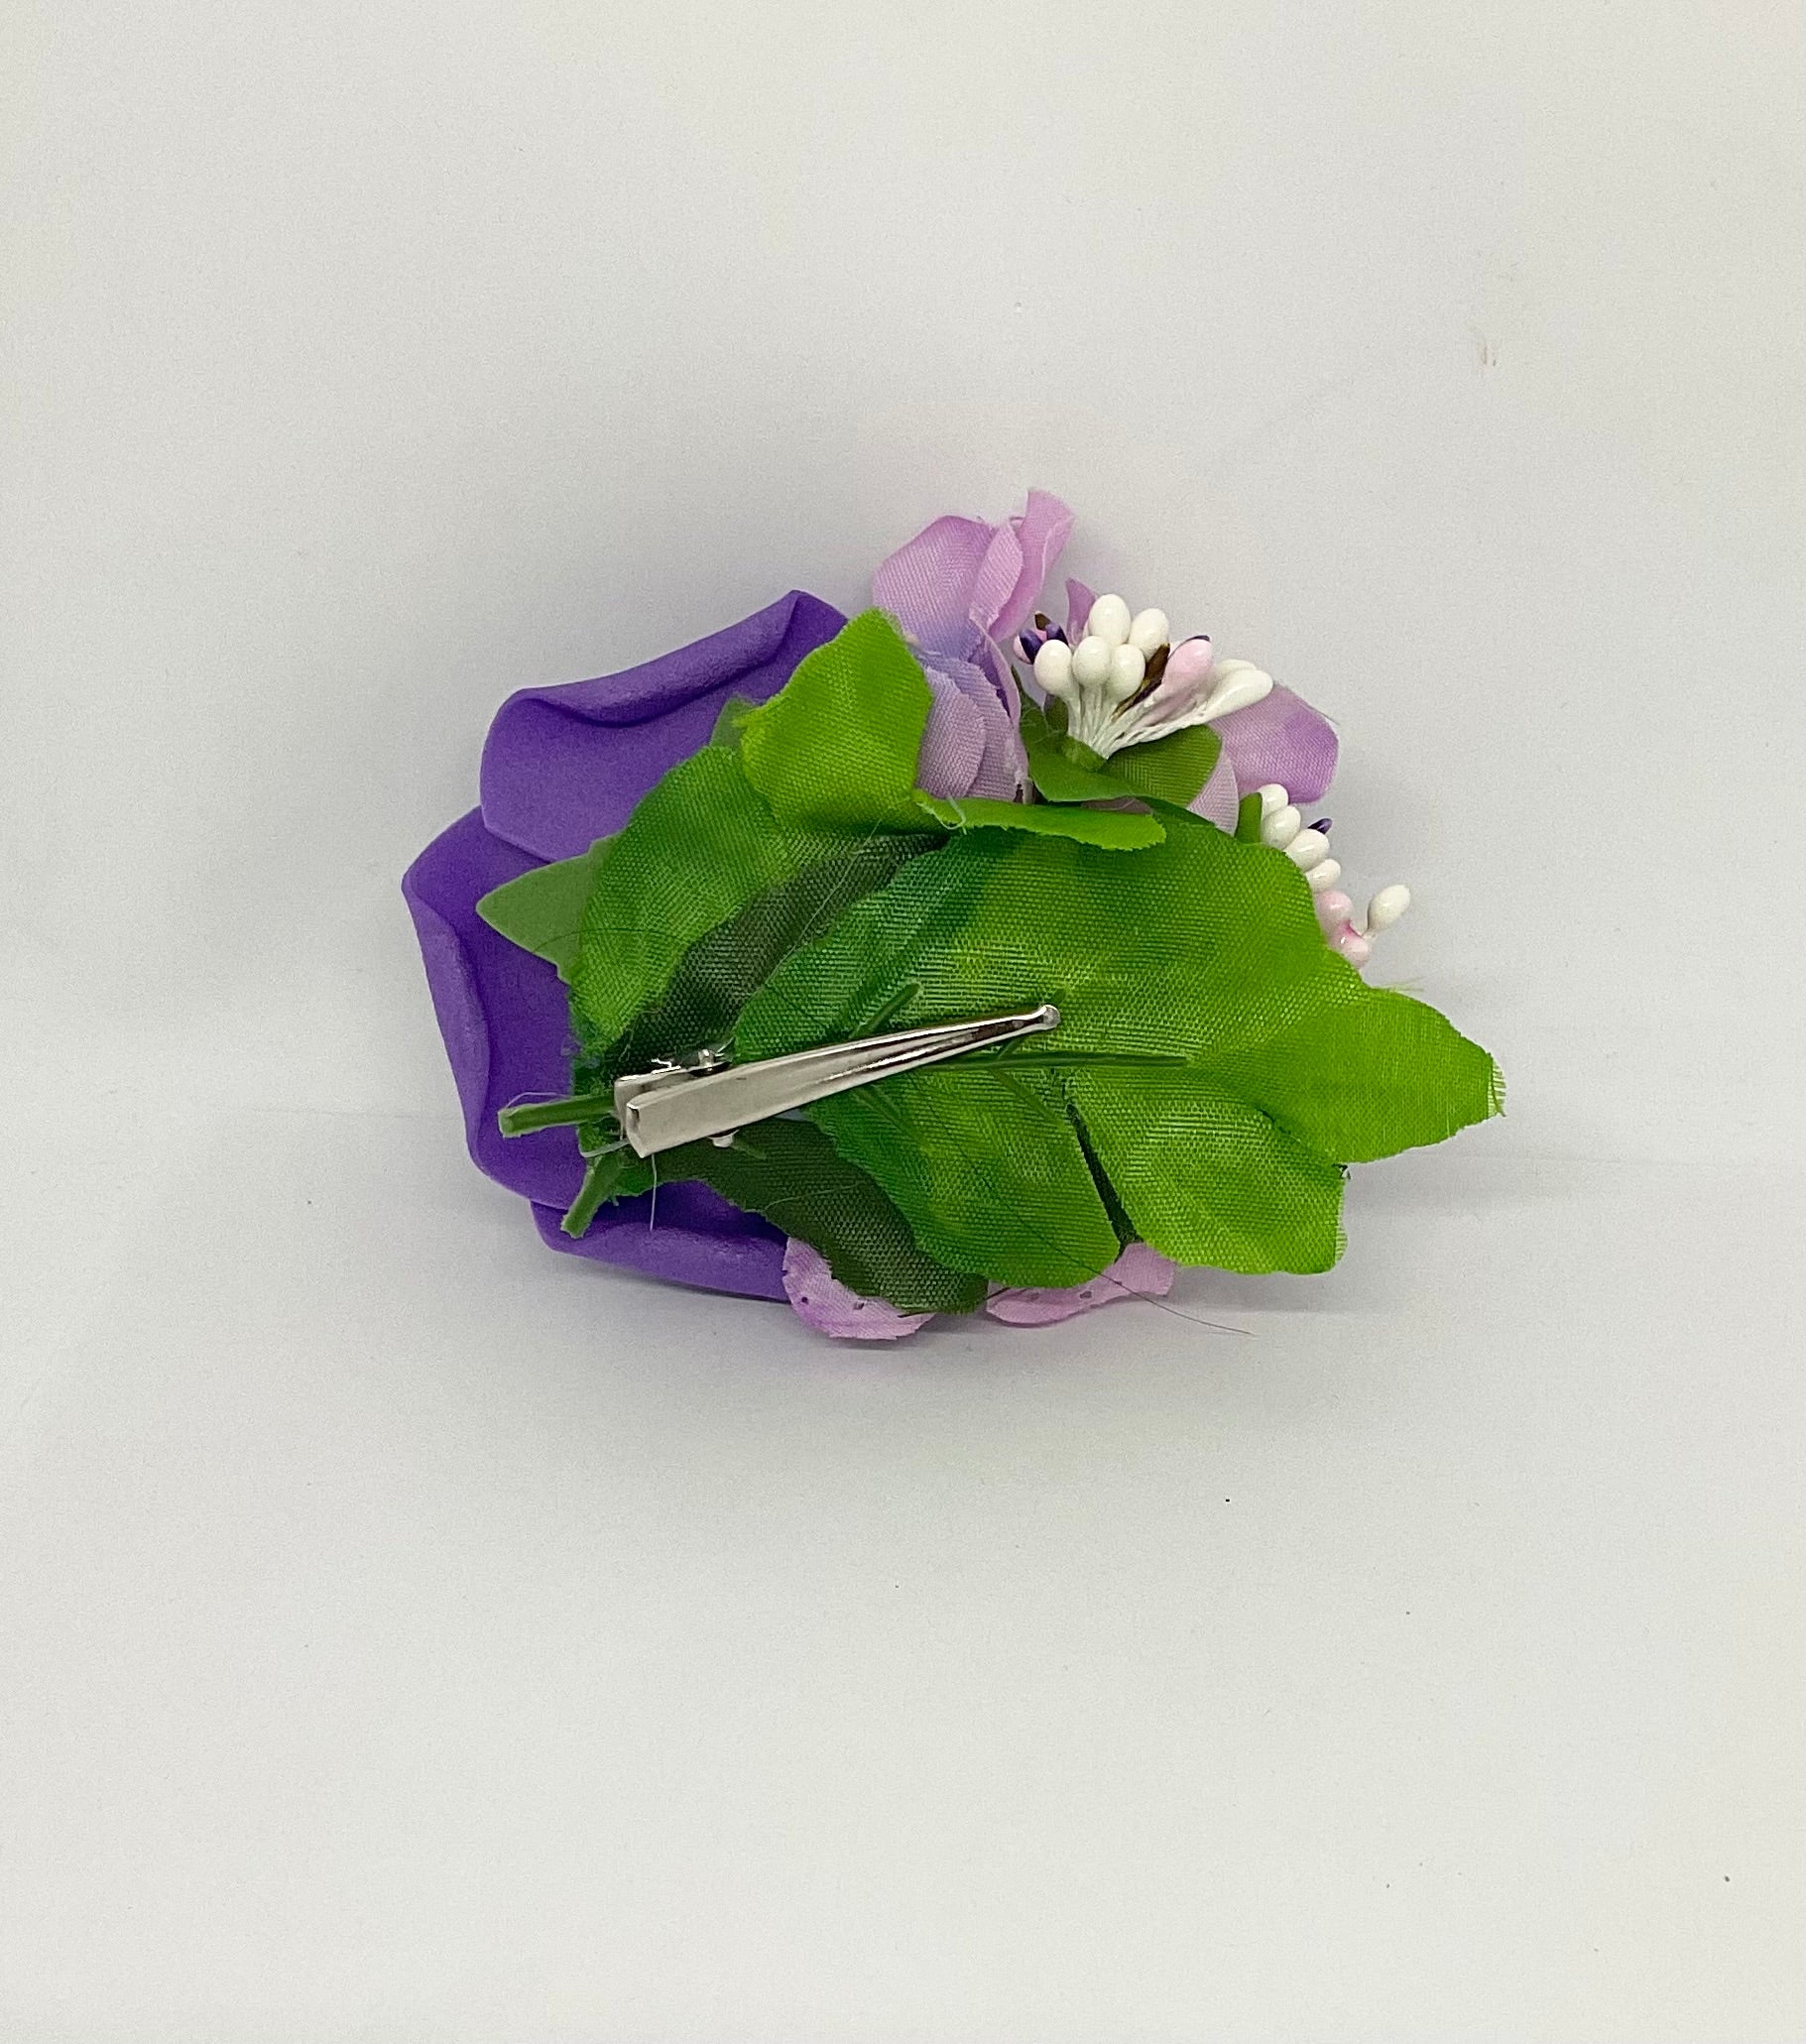 Romantic Purple and Lavender Rose Hair Flower